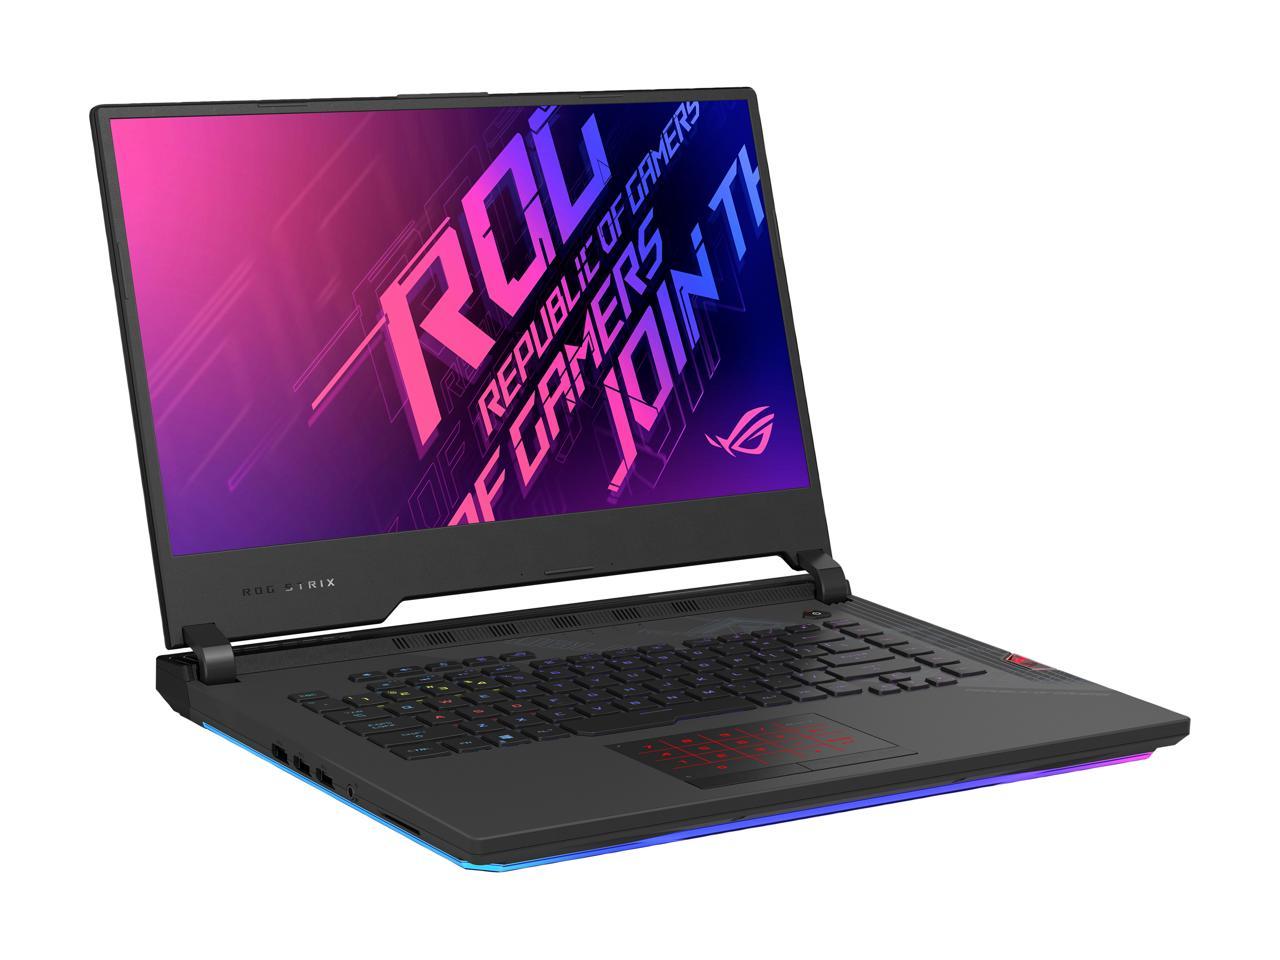 ASUS ROG Strix Scar 15 (2020) - 15.6" 240 Hz - GeForce RTX 2070 SUPER - Intel Core i7-10875H - 16 GB DDR4 - 1 TB SSD - Per-Key RGB KB - Windows 10 - Gaming Laptop (G532LWS-DS76)